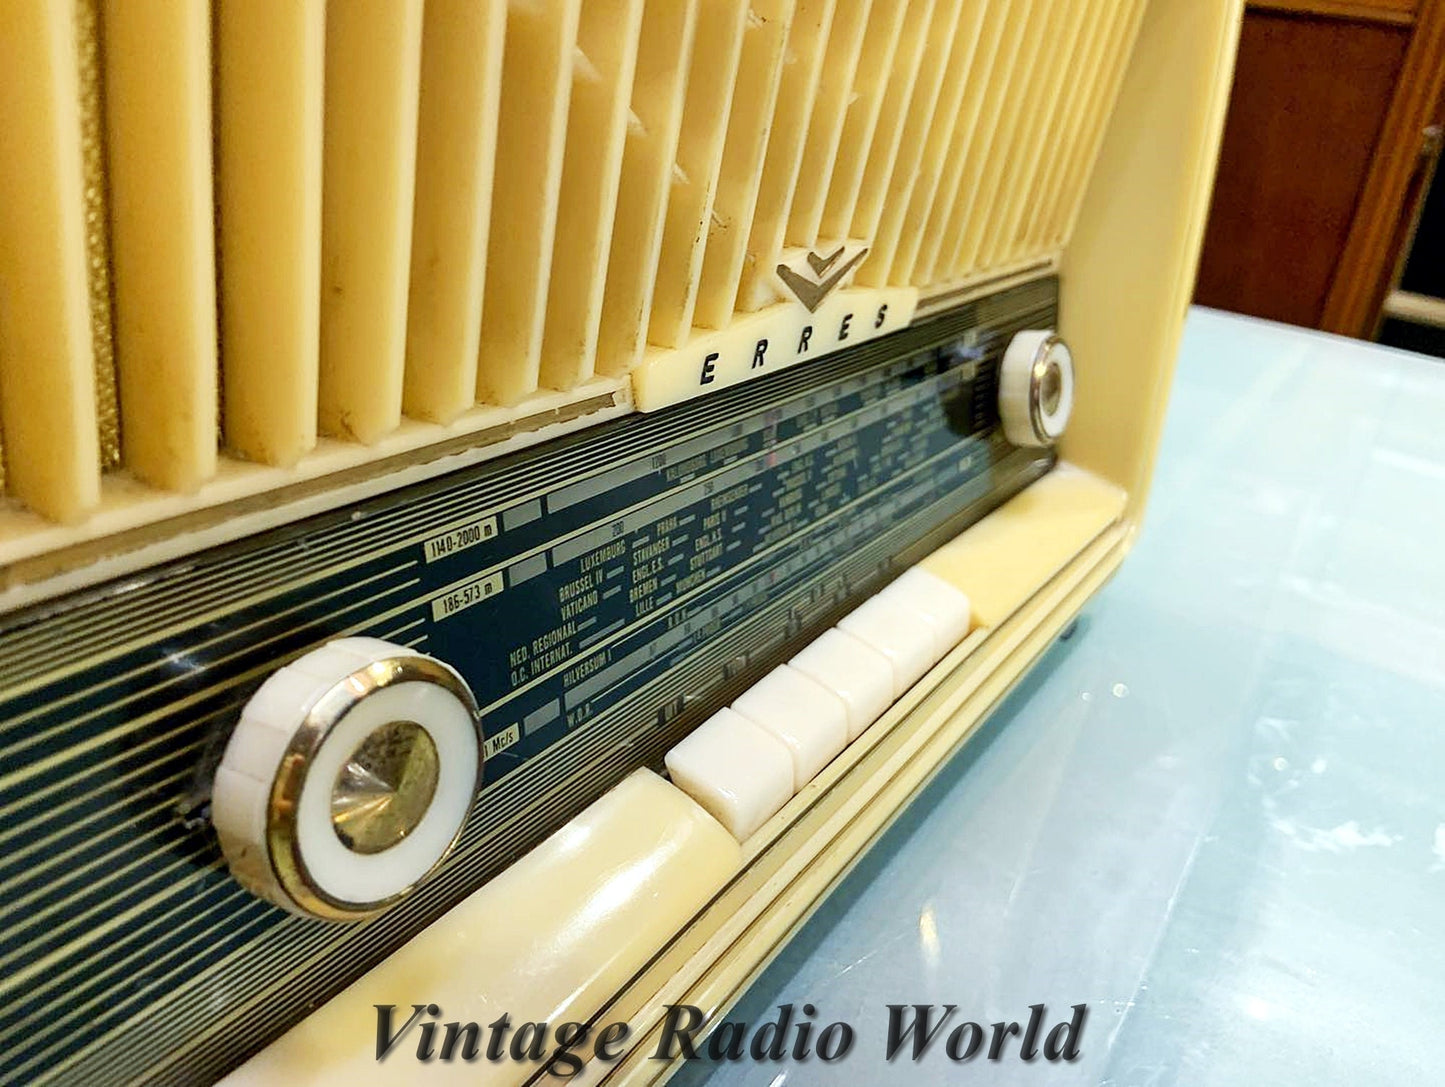 ERRES | Vintage Radio | Orjinal Old Radio | Antique Radio | Lamp Radio | ERRES Radio Bakelite safe